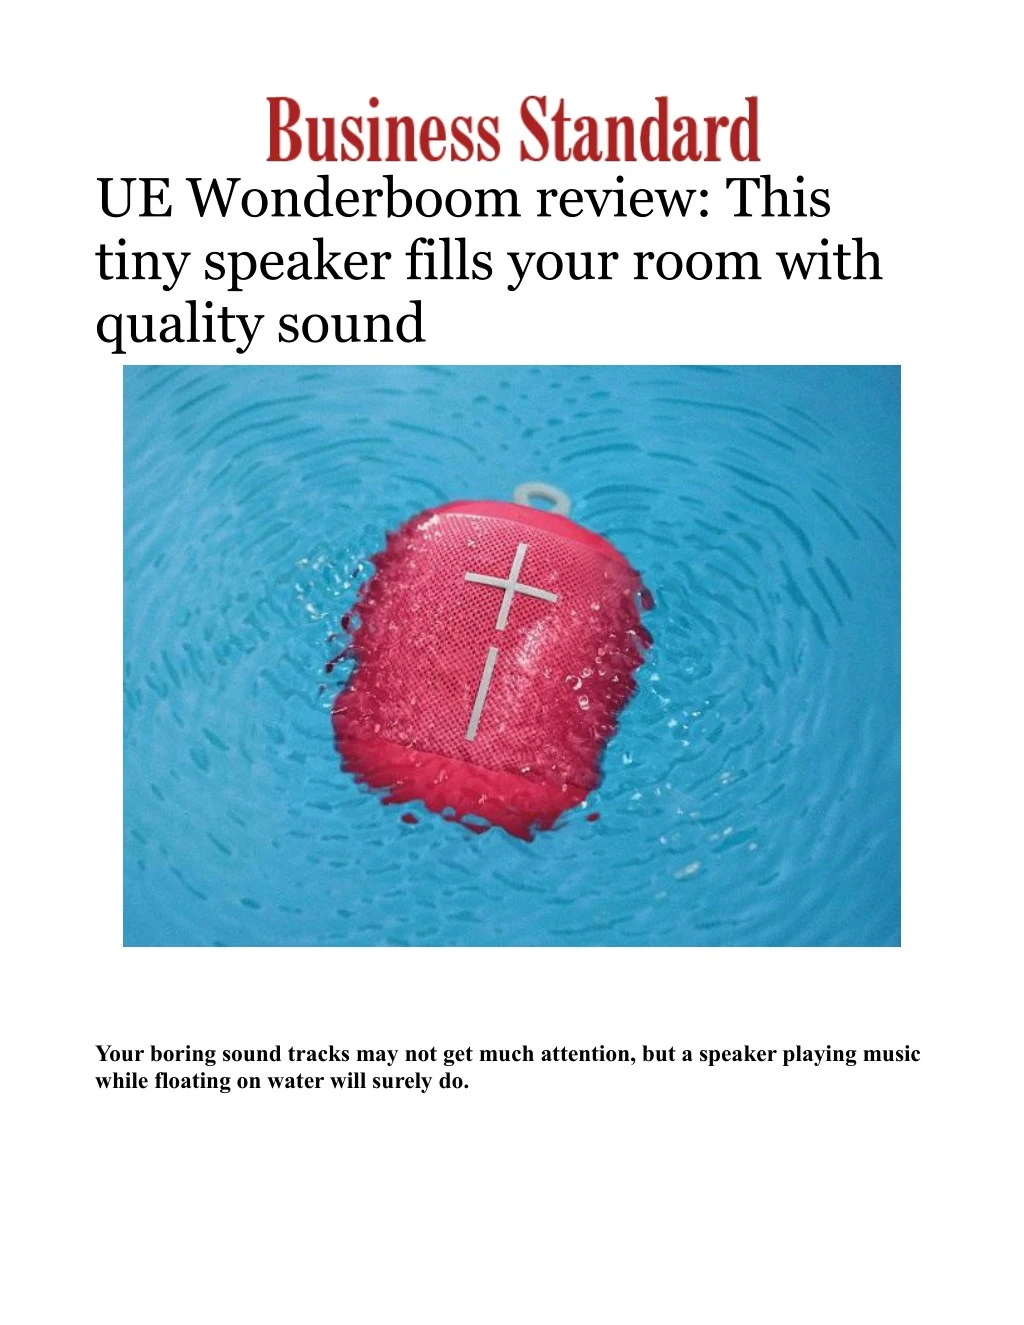 ue wonderboom review this tiny speaker fills your